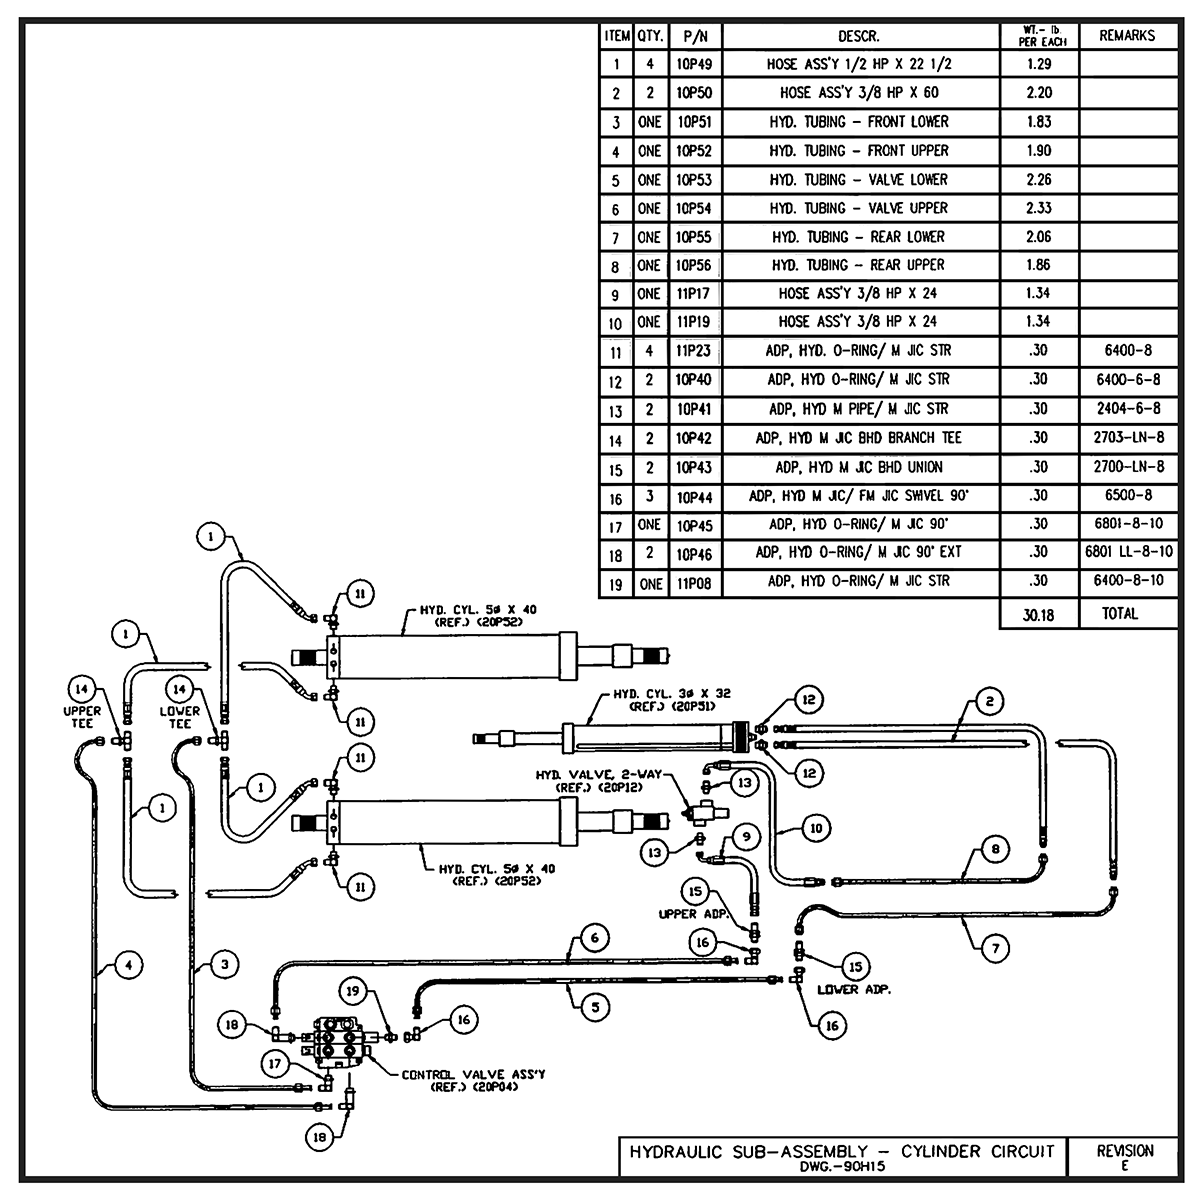 Swaploader SL-125 Cylinder Circuit Hydraulic Sub-Assembly Diagram